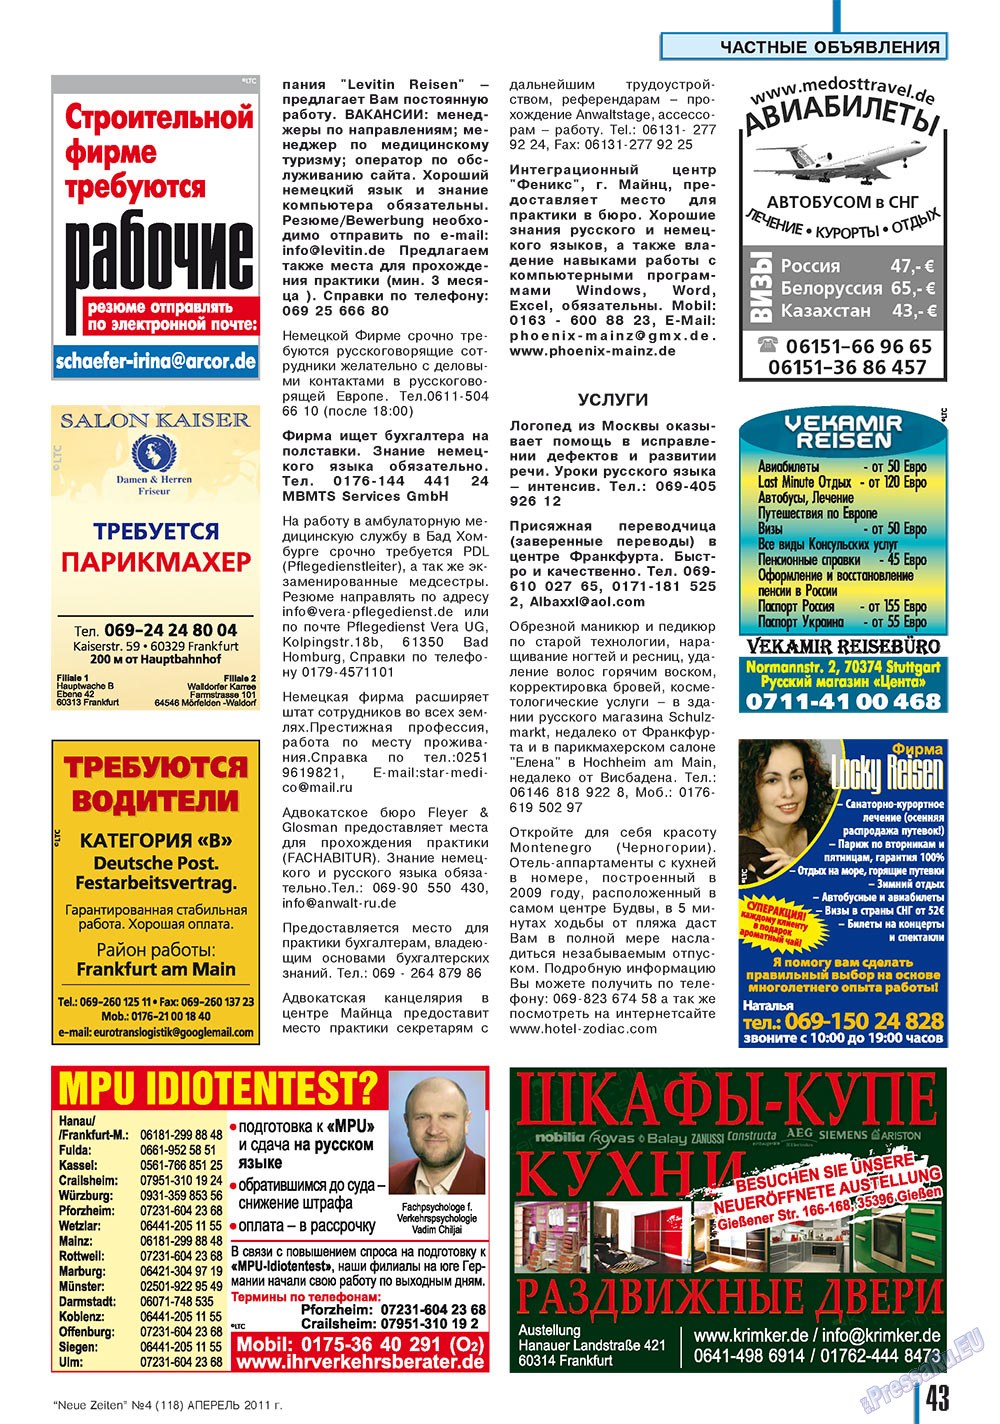 Neue Zeiten (журнал). 2011 год, номер 4, стр. 43